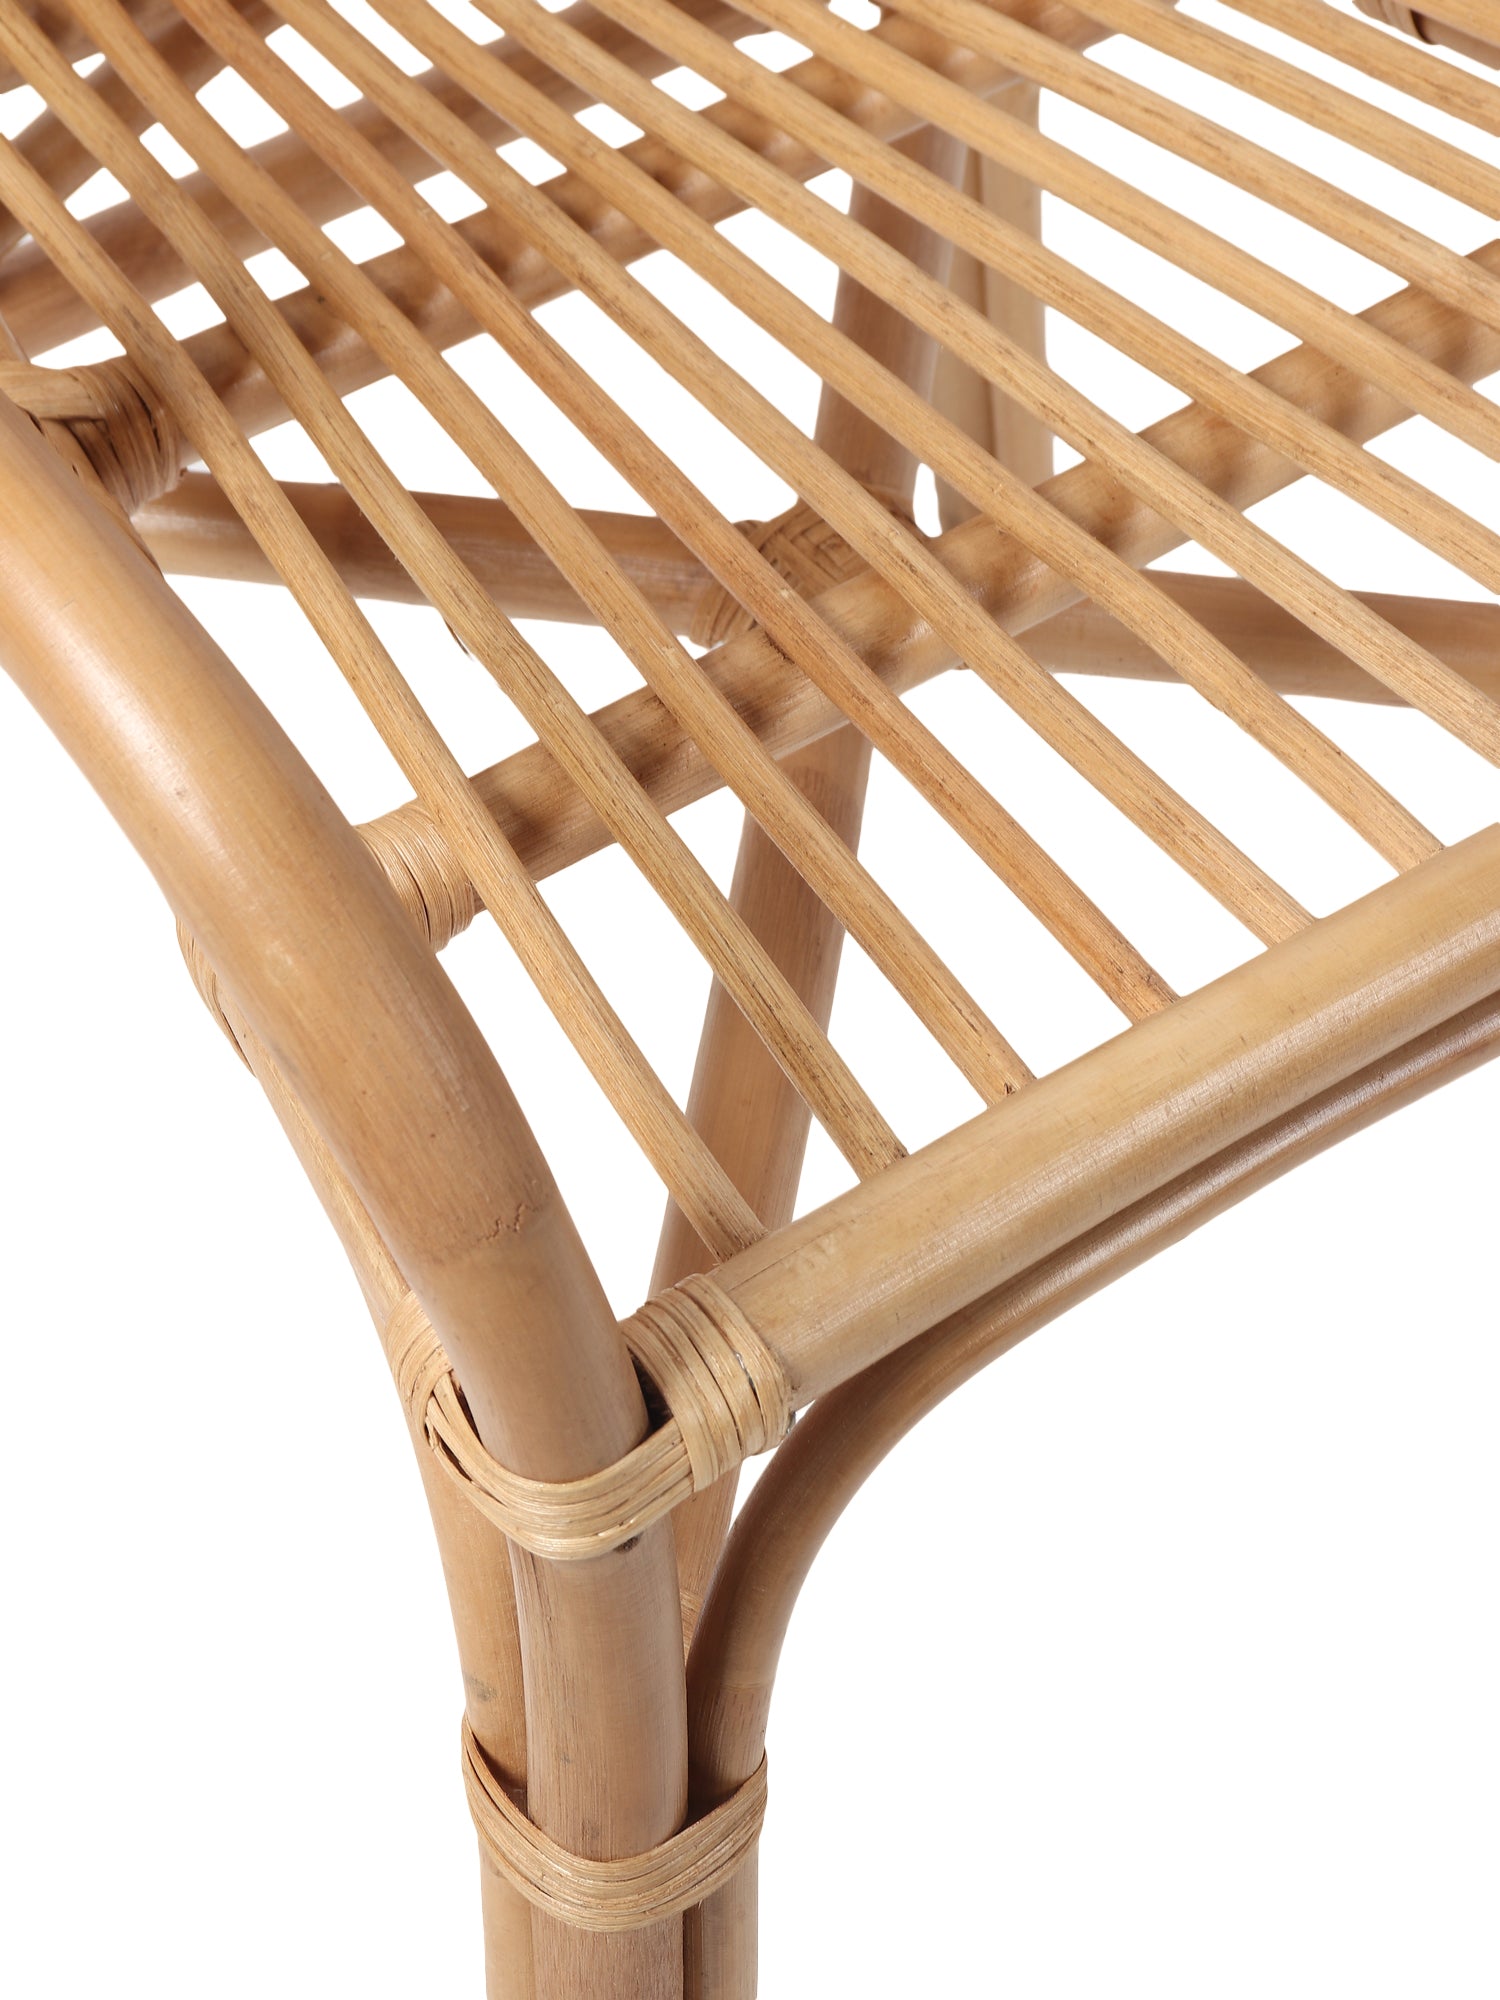 Patio Chairs & Bamboo Chair